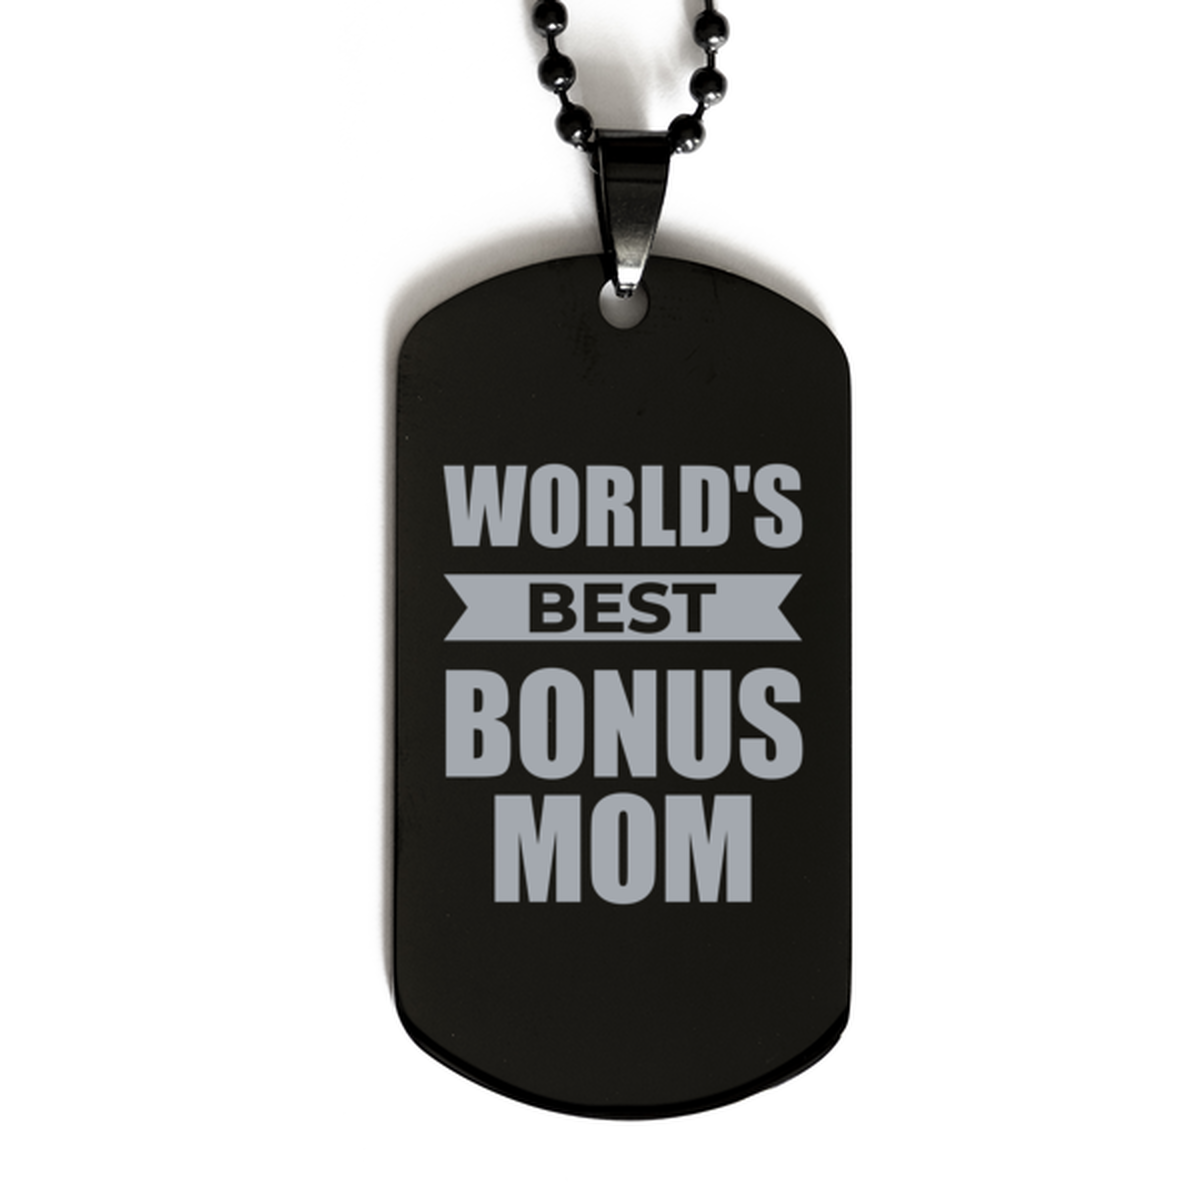 Worlds Best Bonus Mom Gifts, Funny Black Engraved Dog Tag For Bonus Mom, Birthday Presents For Women